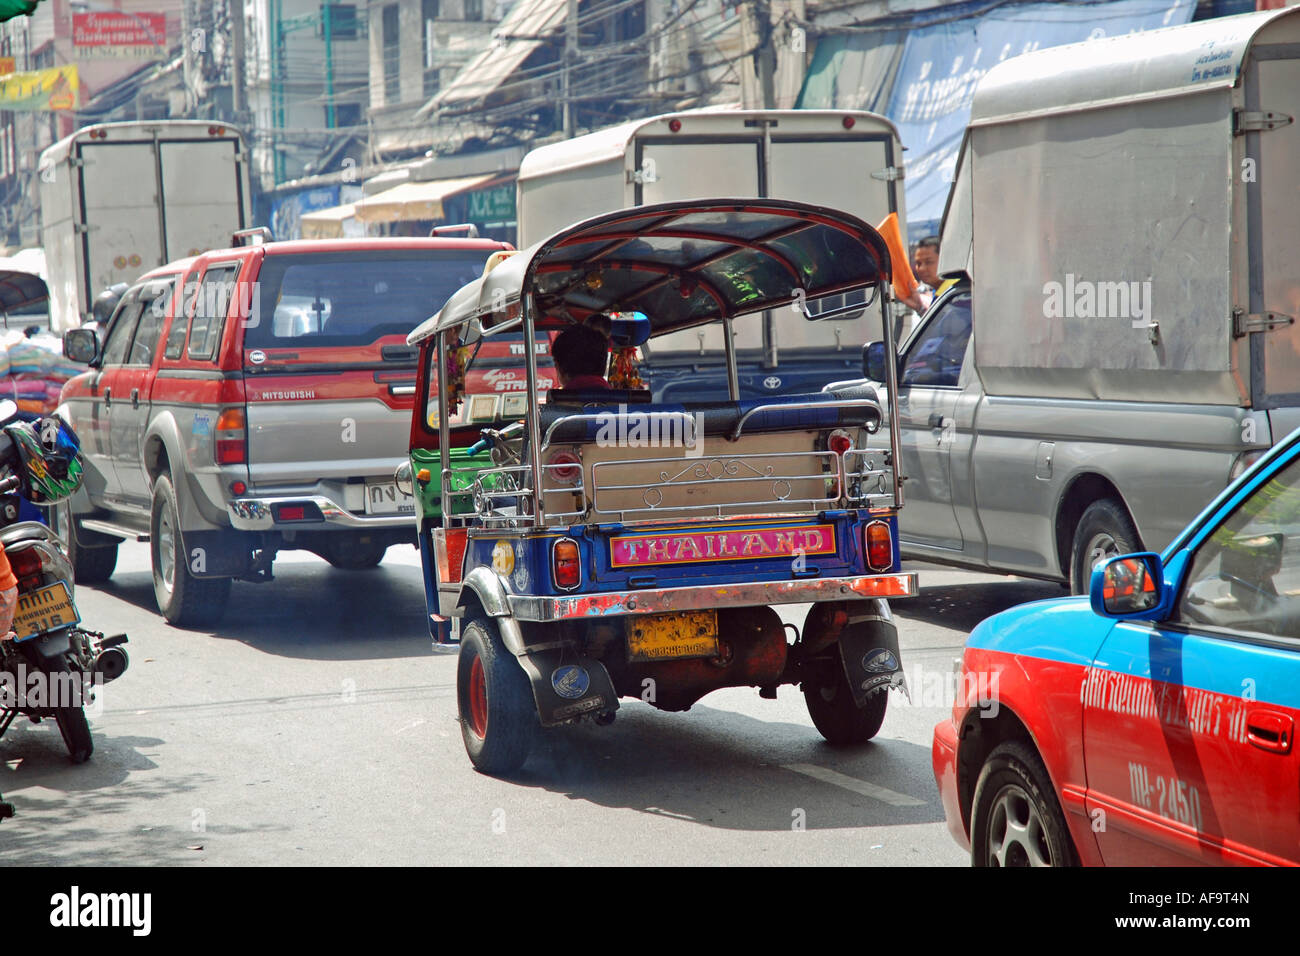 tuk-tuk, auto rickshaw in road traffic, Thailand, Bangkok Stock Photo